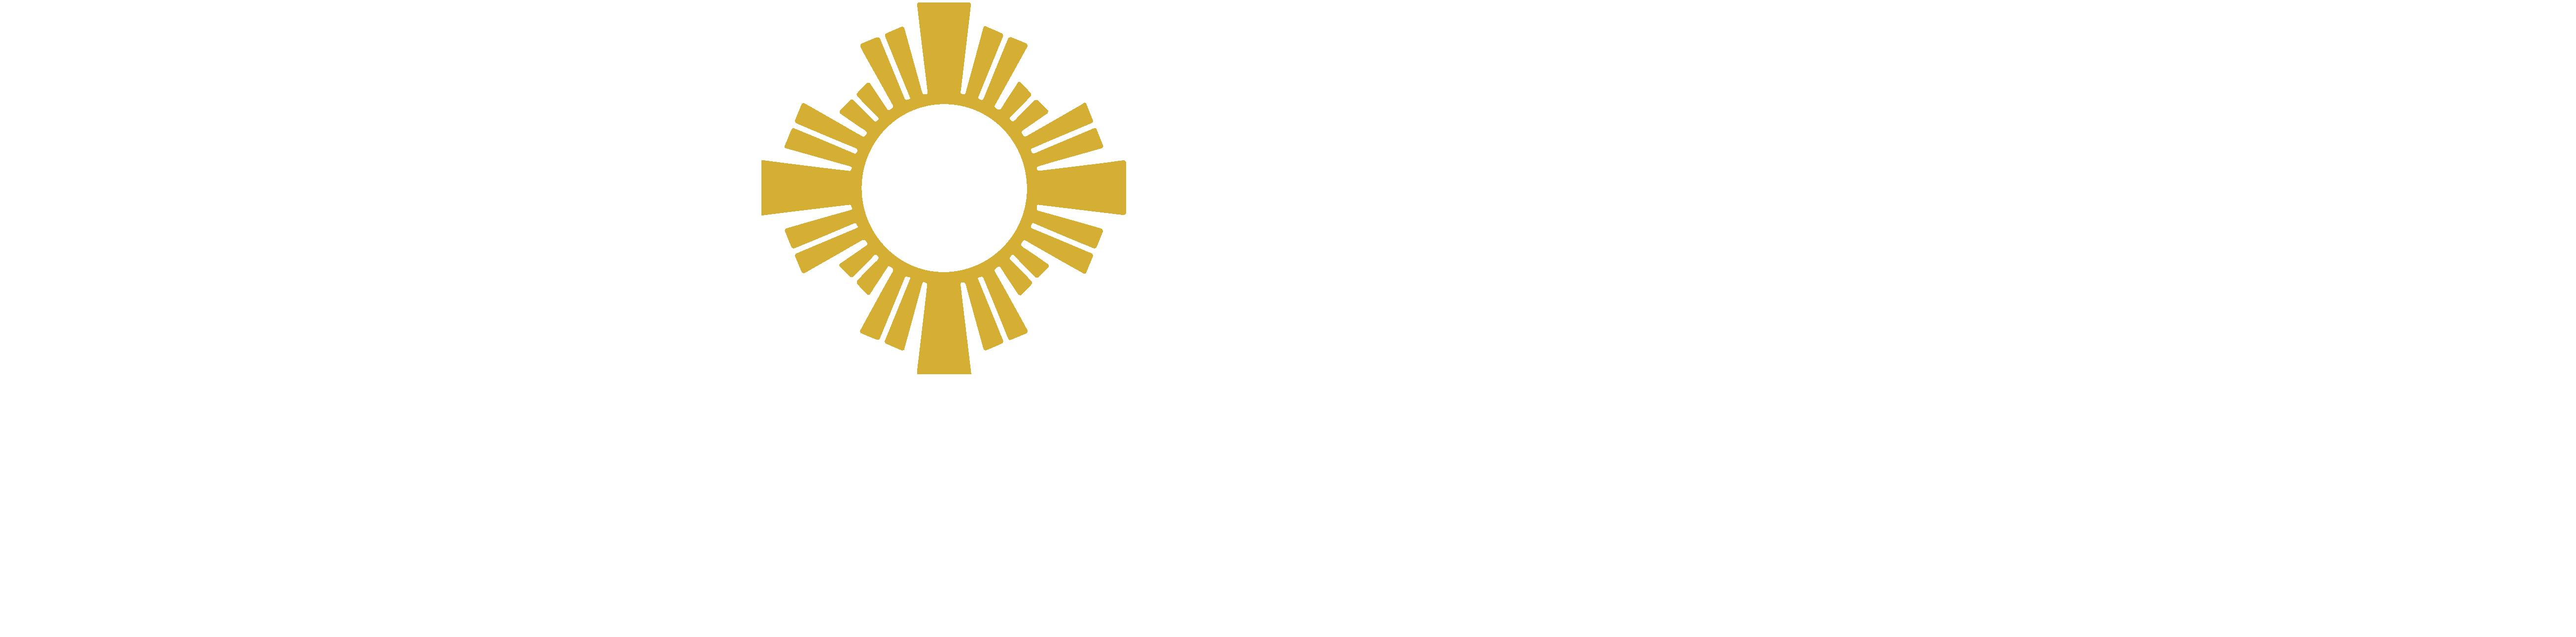 Encounter School of Ministry, Ottawa Campus